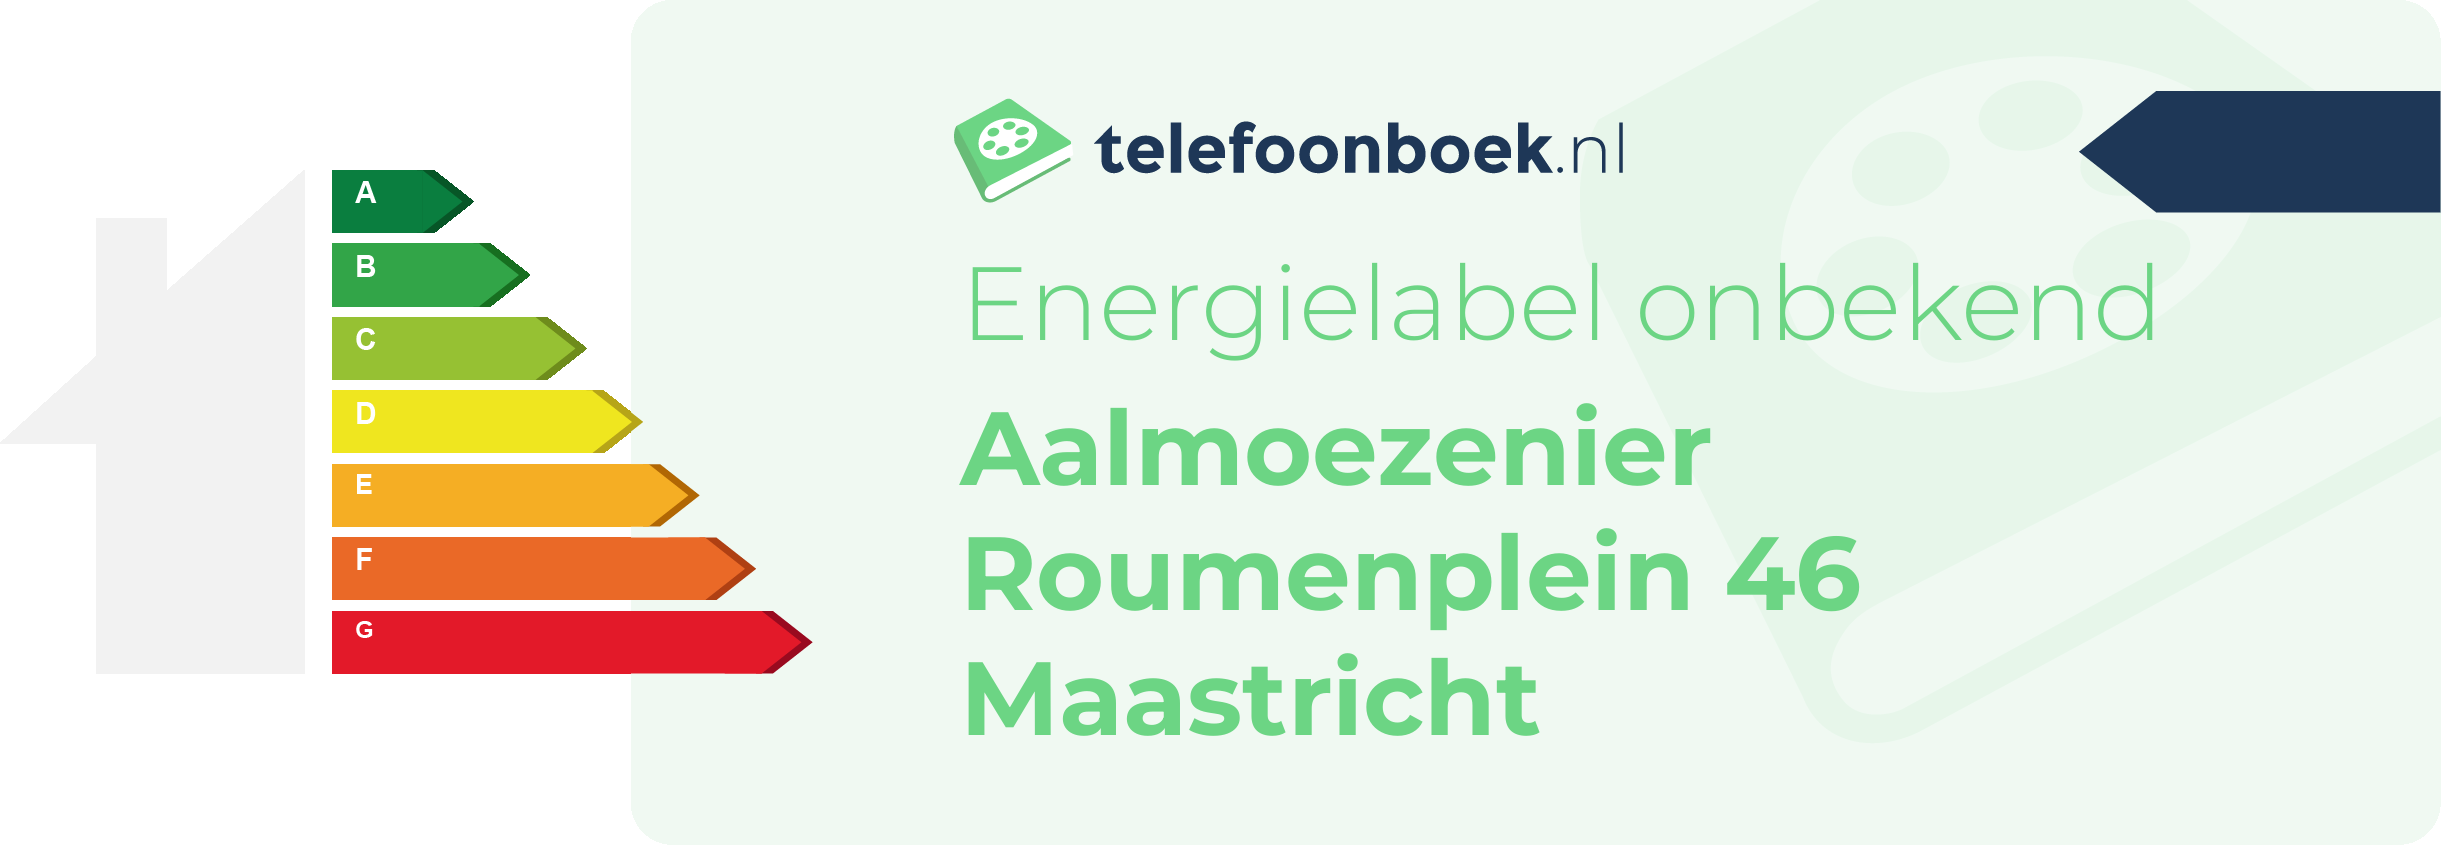 Energielabel Aalmoezenier Roumenplein 46 Maastricht